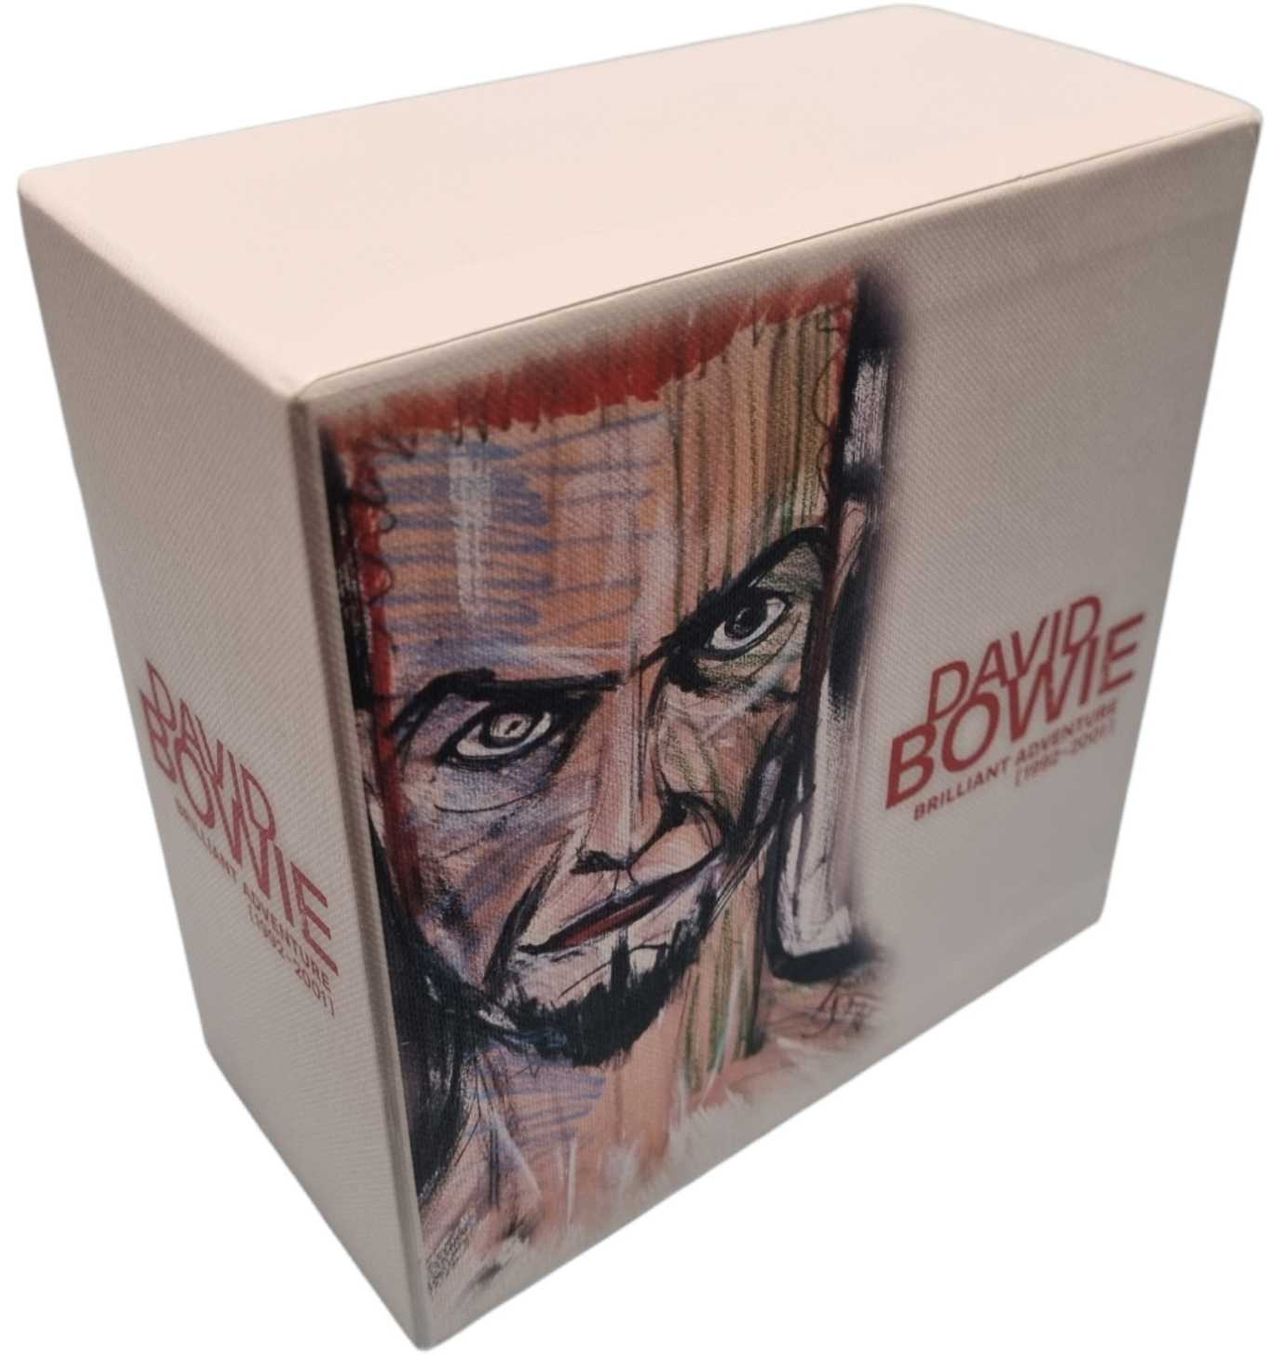 David Bowie Brilliant Adventure (1992 – 2001) UK CD Album Box Set DBX5